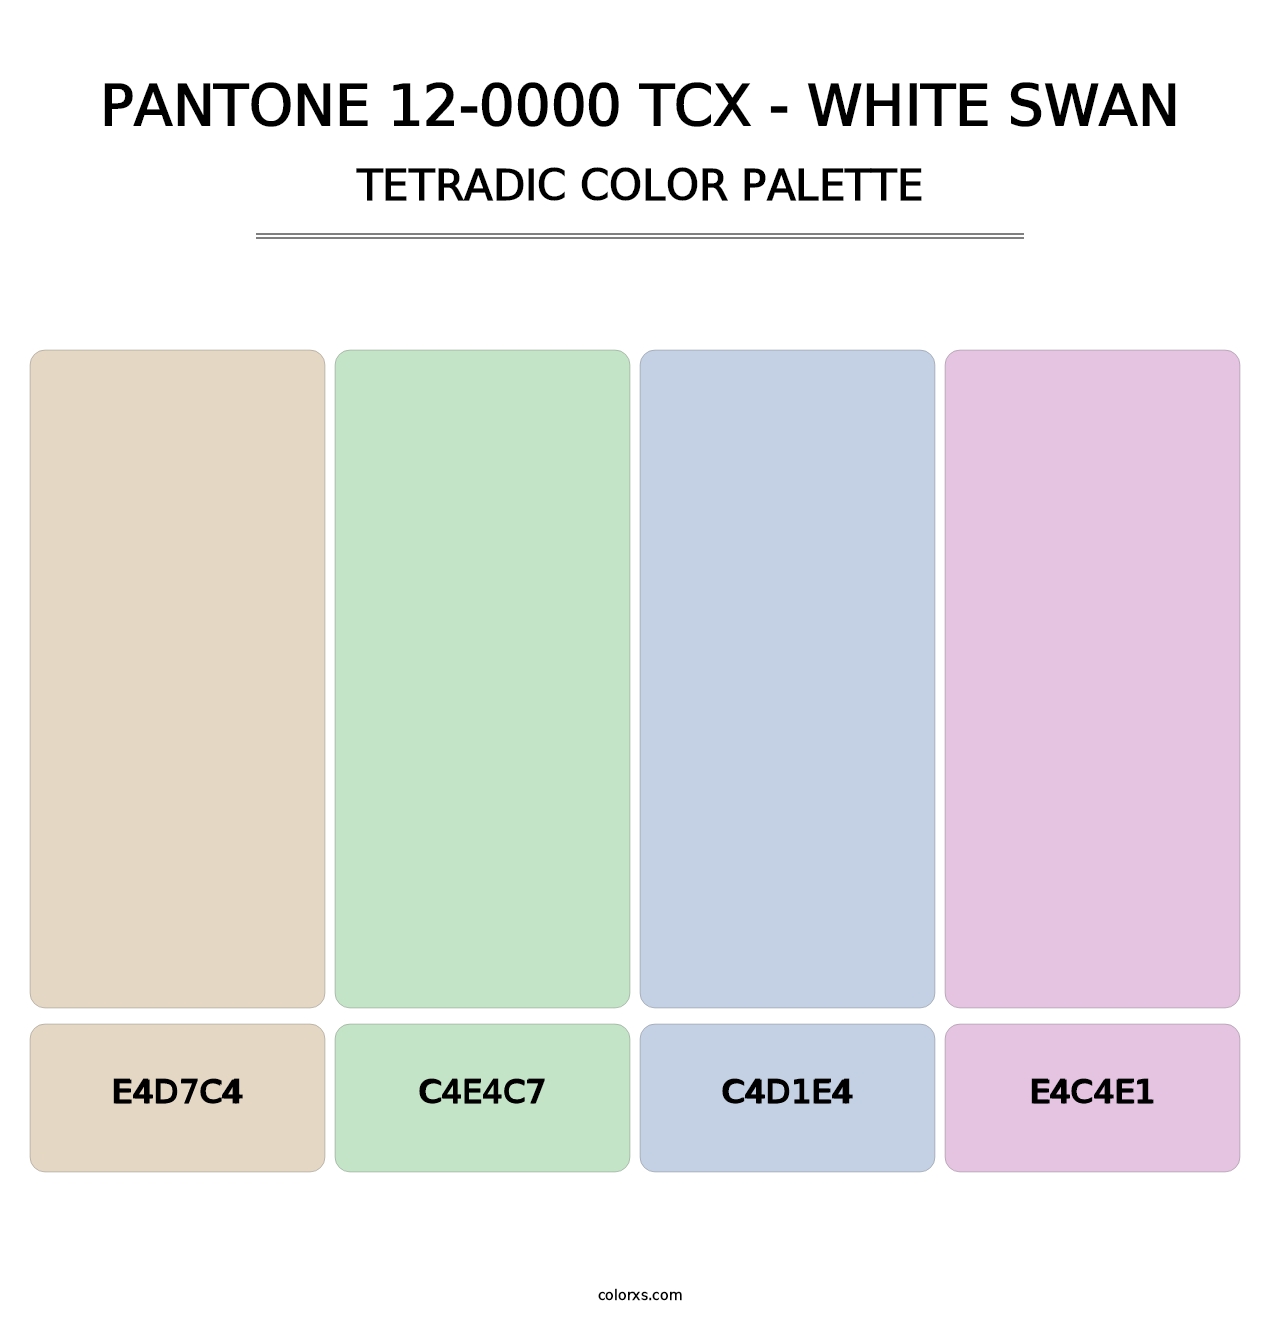 PANTONE 12-0000 TCX - White Swan - Tetradic Color Palette